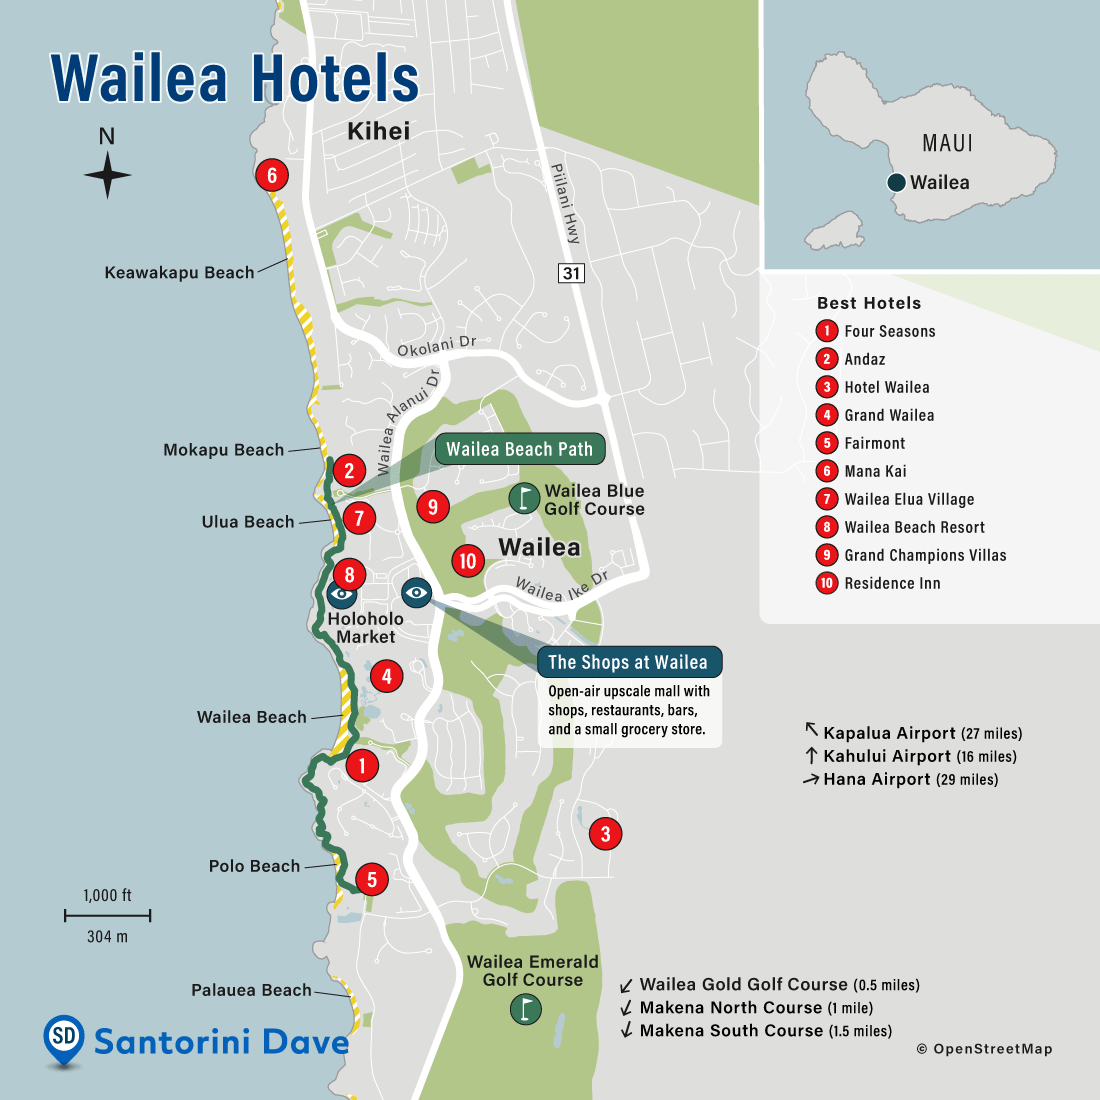 Map of hotels and beach resorts in Wailea, Maui, Hawaii.